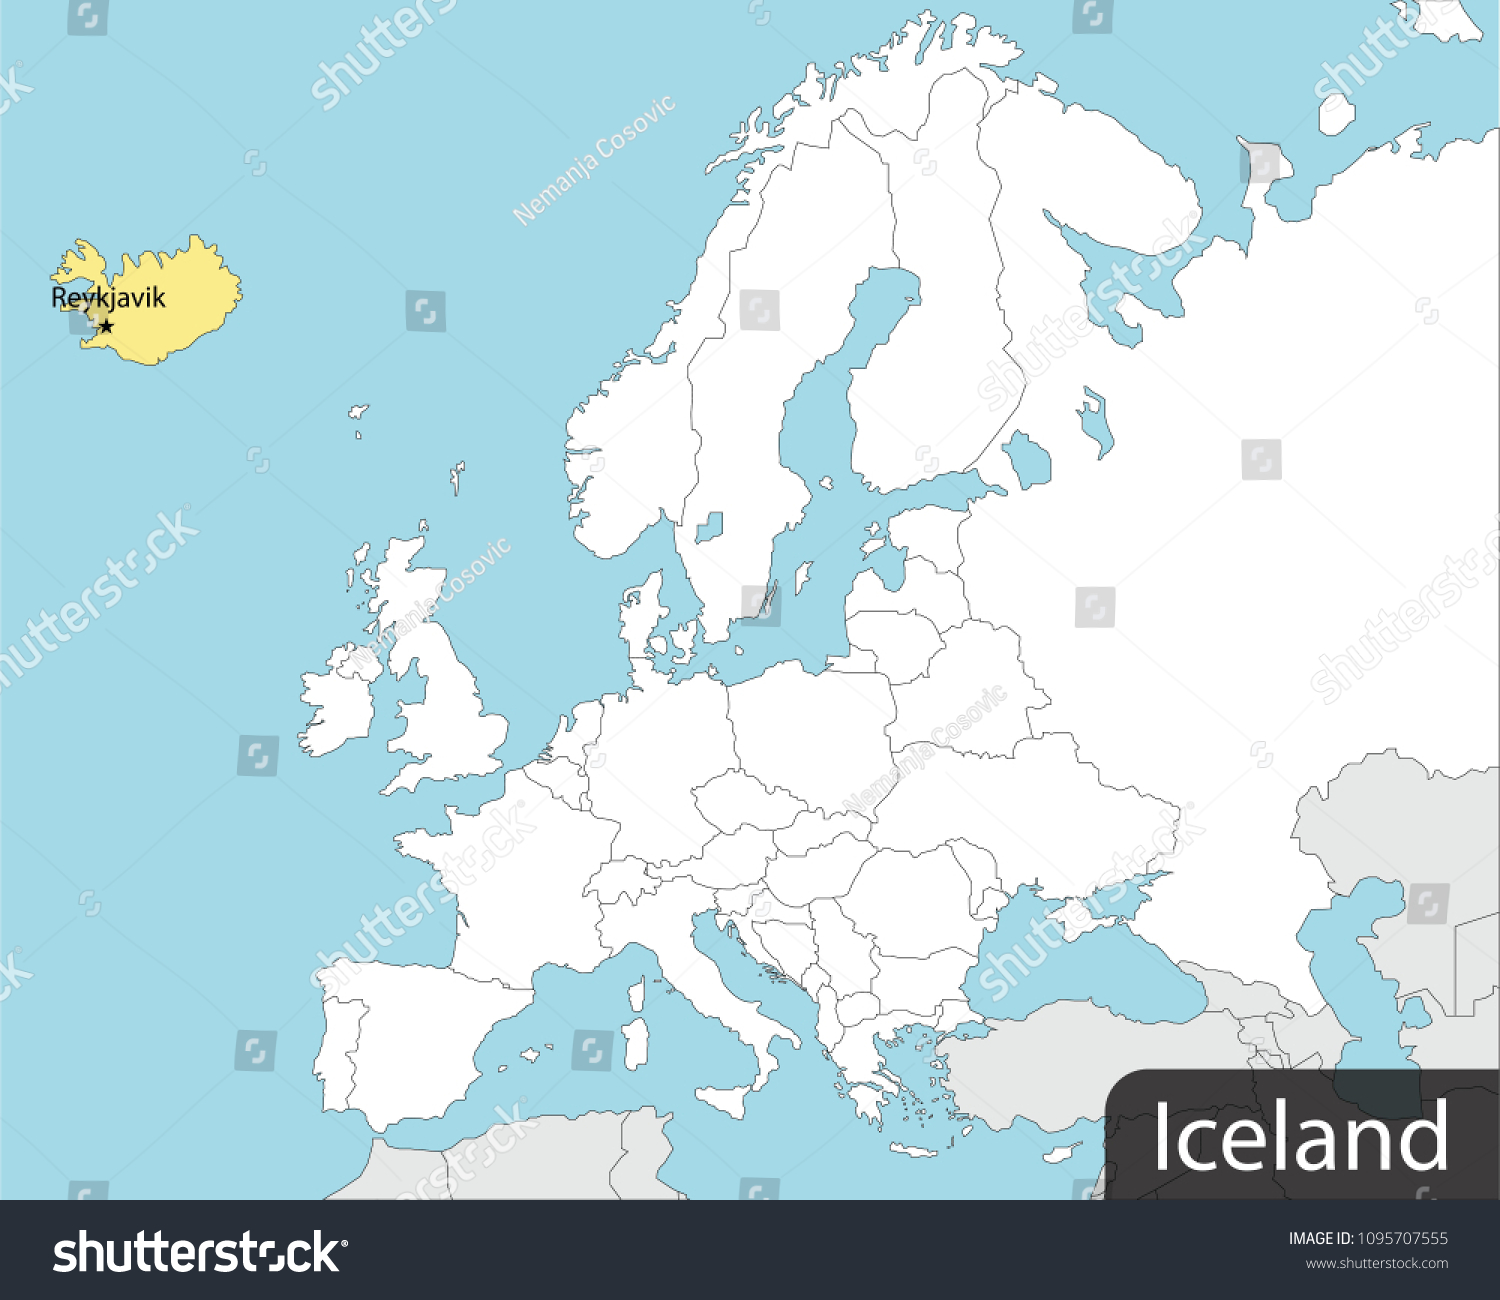 Europe Map Iceland Reykjavik Stock Vector Royalty Free 1095707555